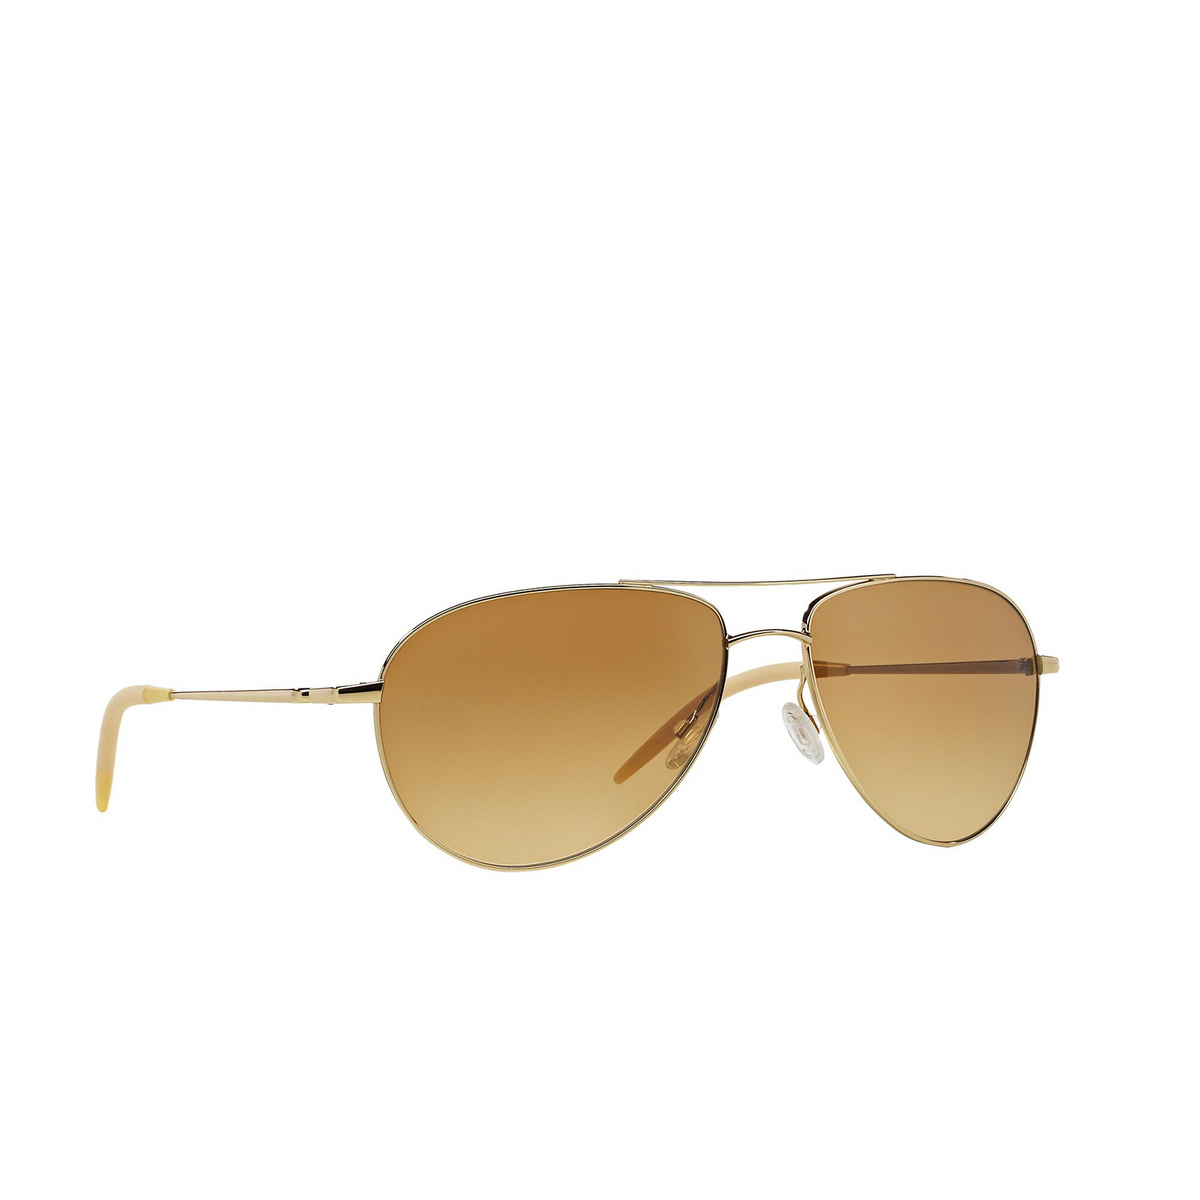 Oliver Peoples® Aviator Sunglasses: Benedict OV1002S color Gold 524251 - three-quarters view.